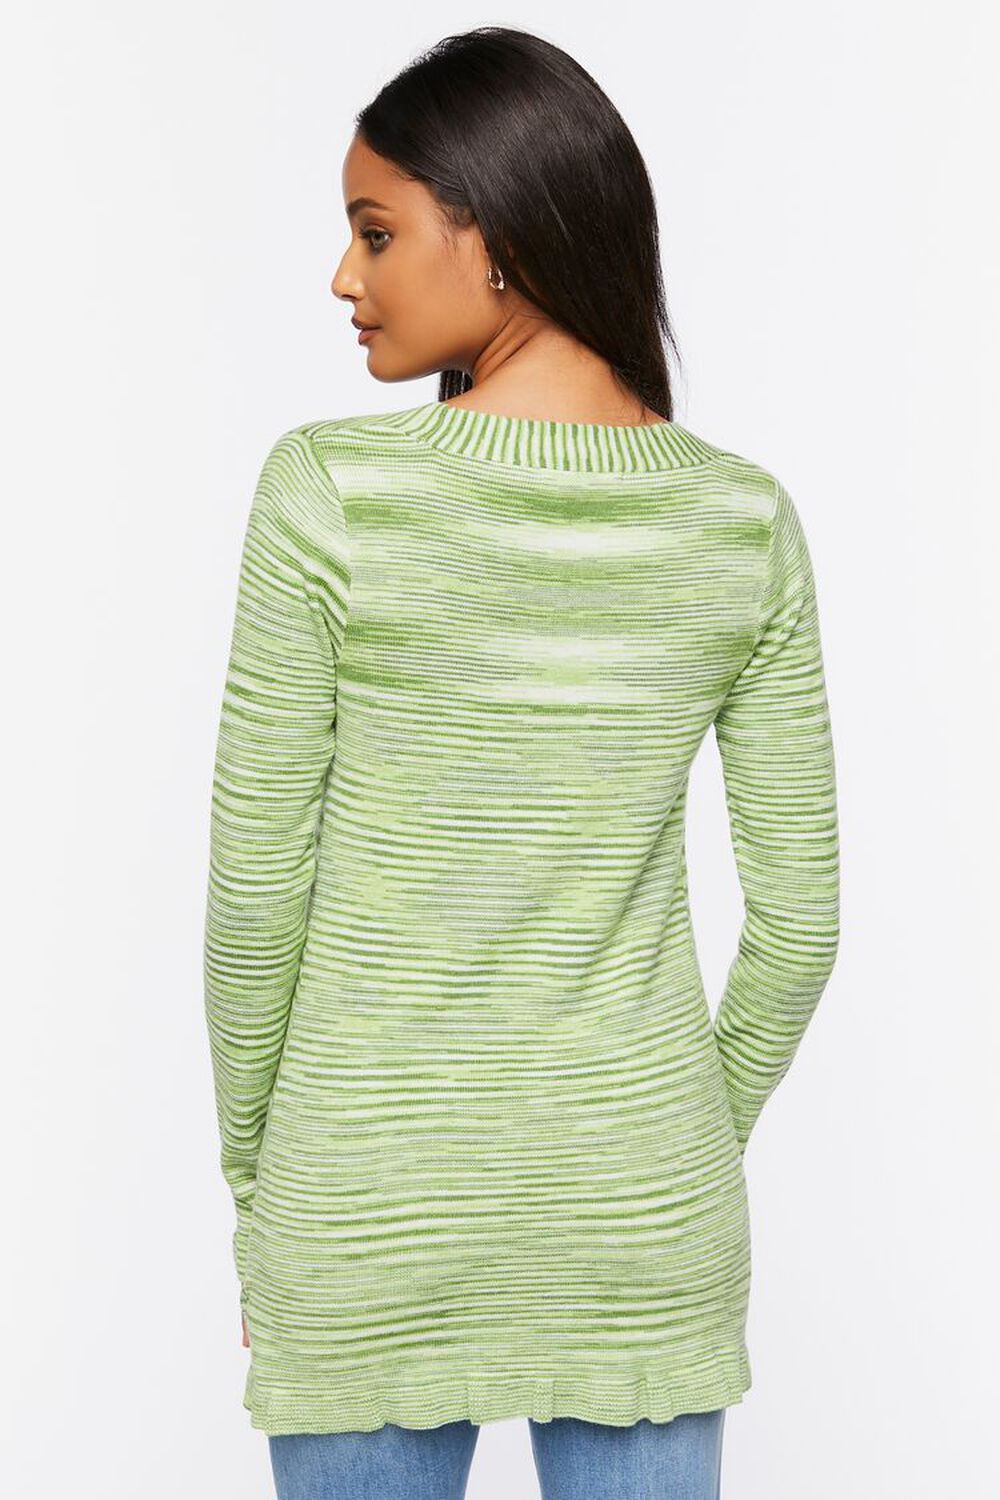 GREEN/MULTI Split-Hem Sweater-Knit Top, image 3